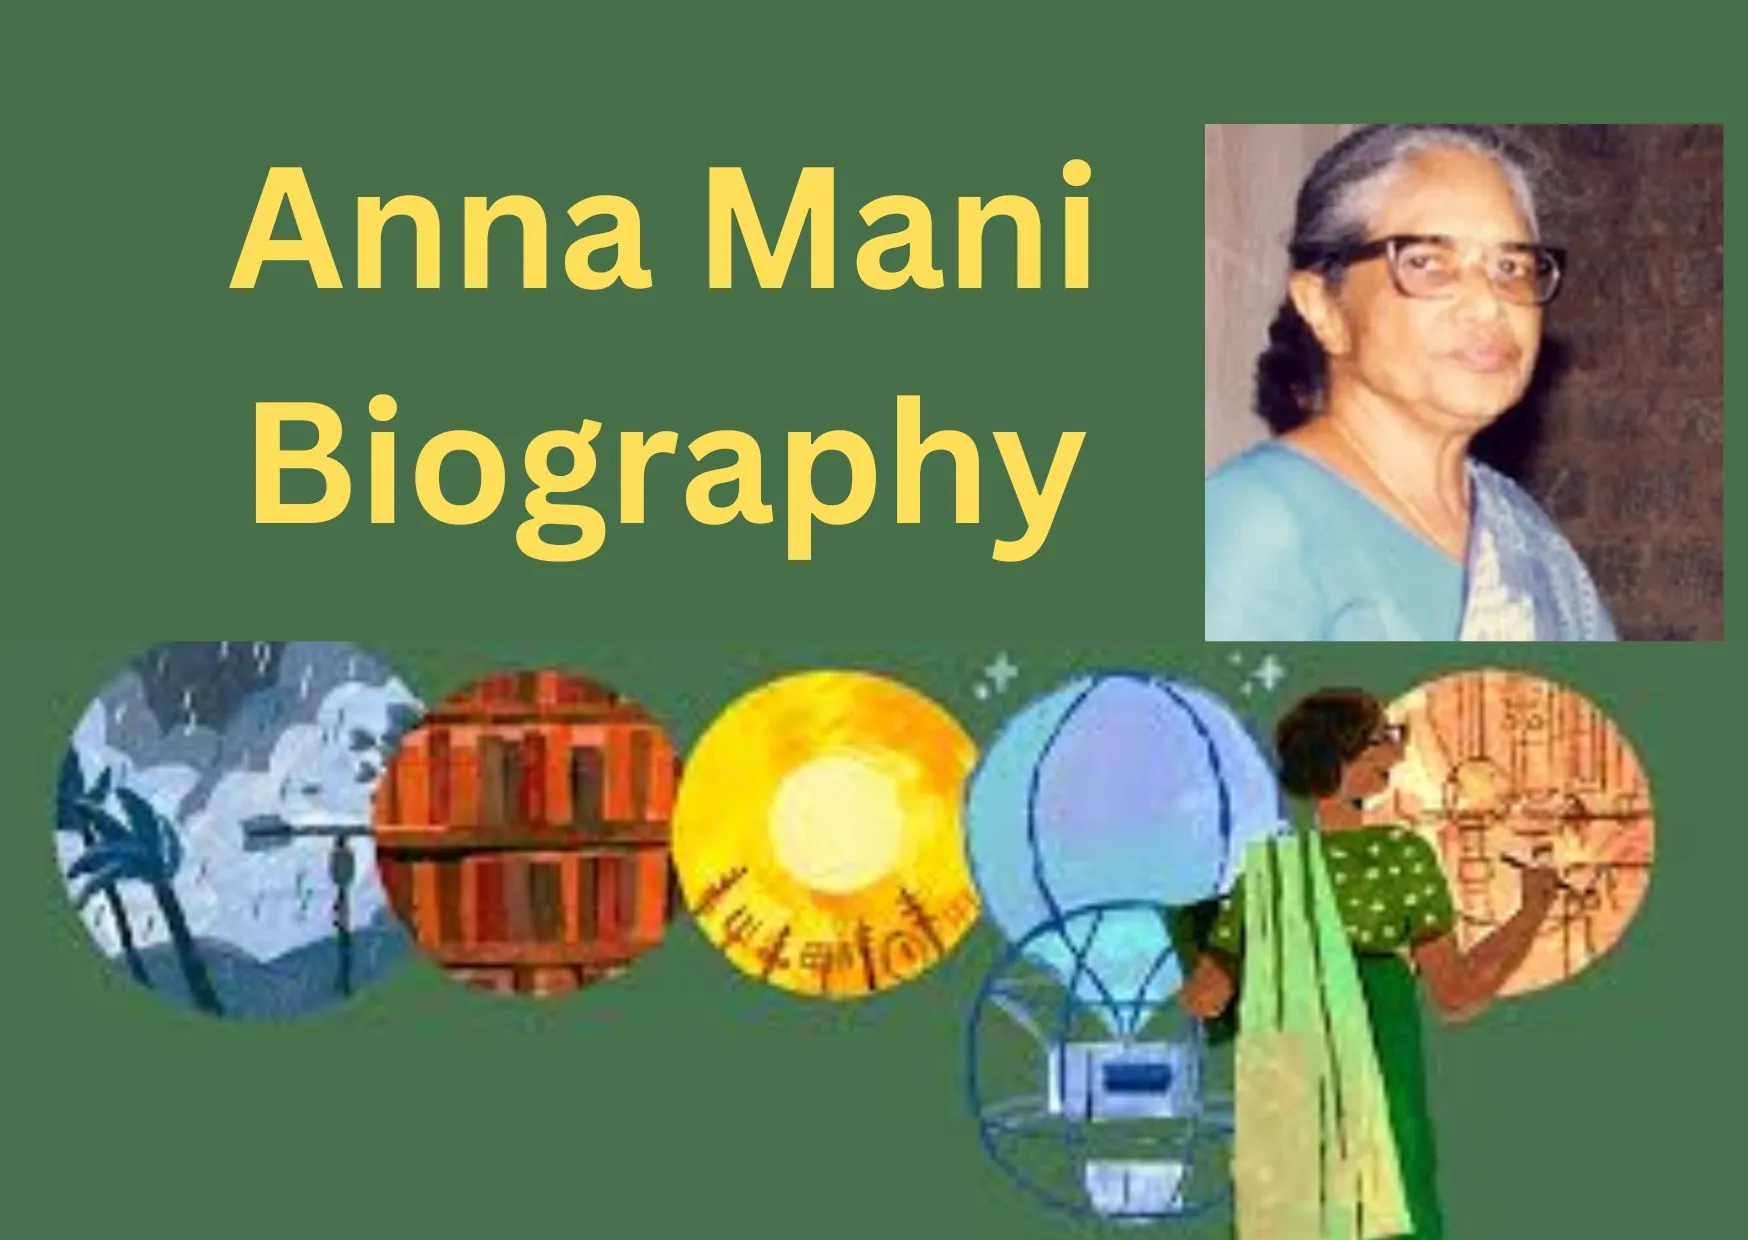 Biography of Anna Mani